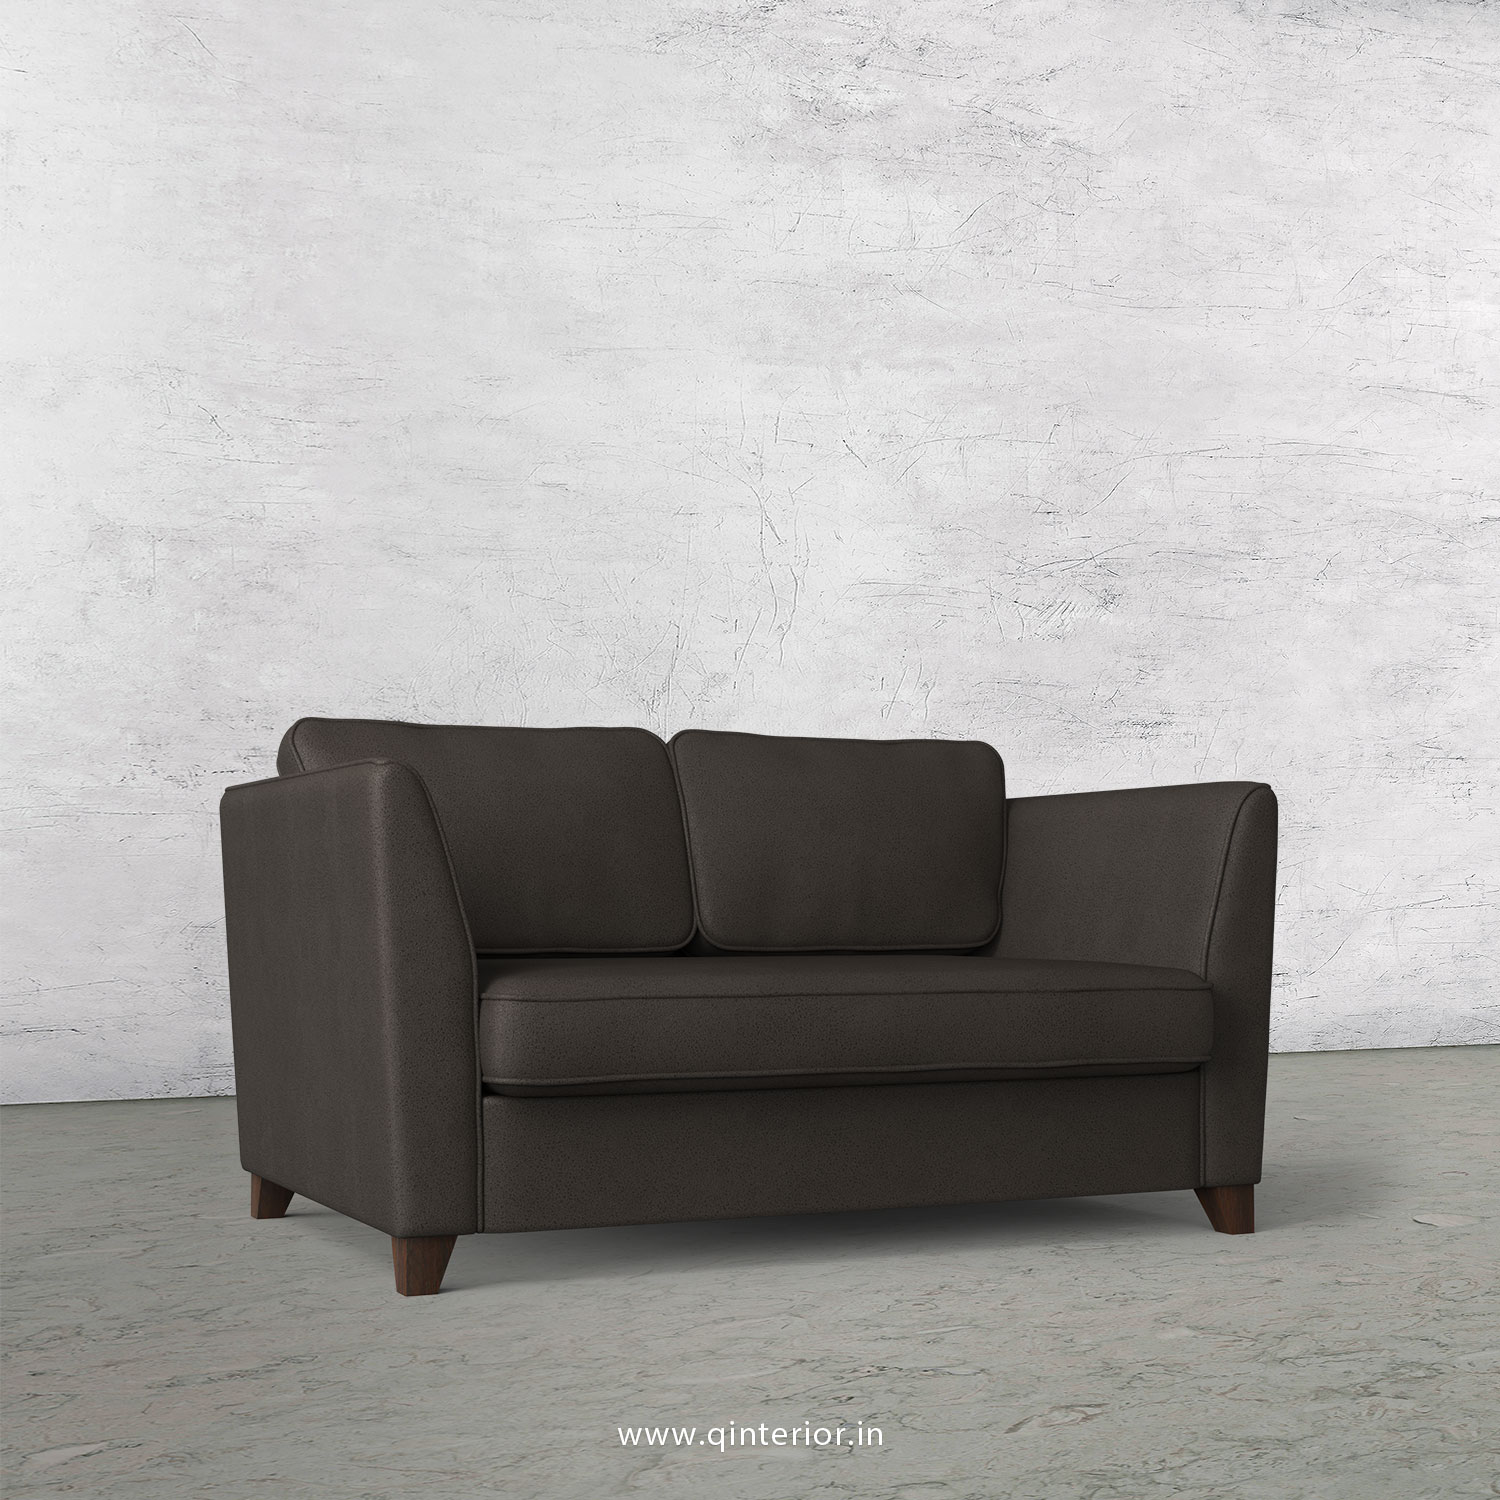 Kingstone 2 Seater Sofa in Fab Leather Fabric - SFA004 FL15